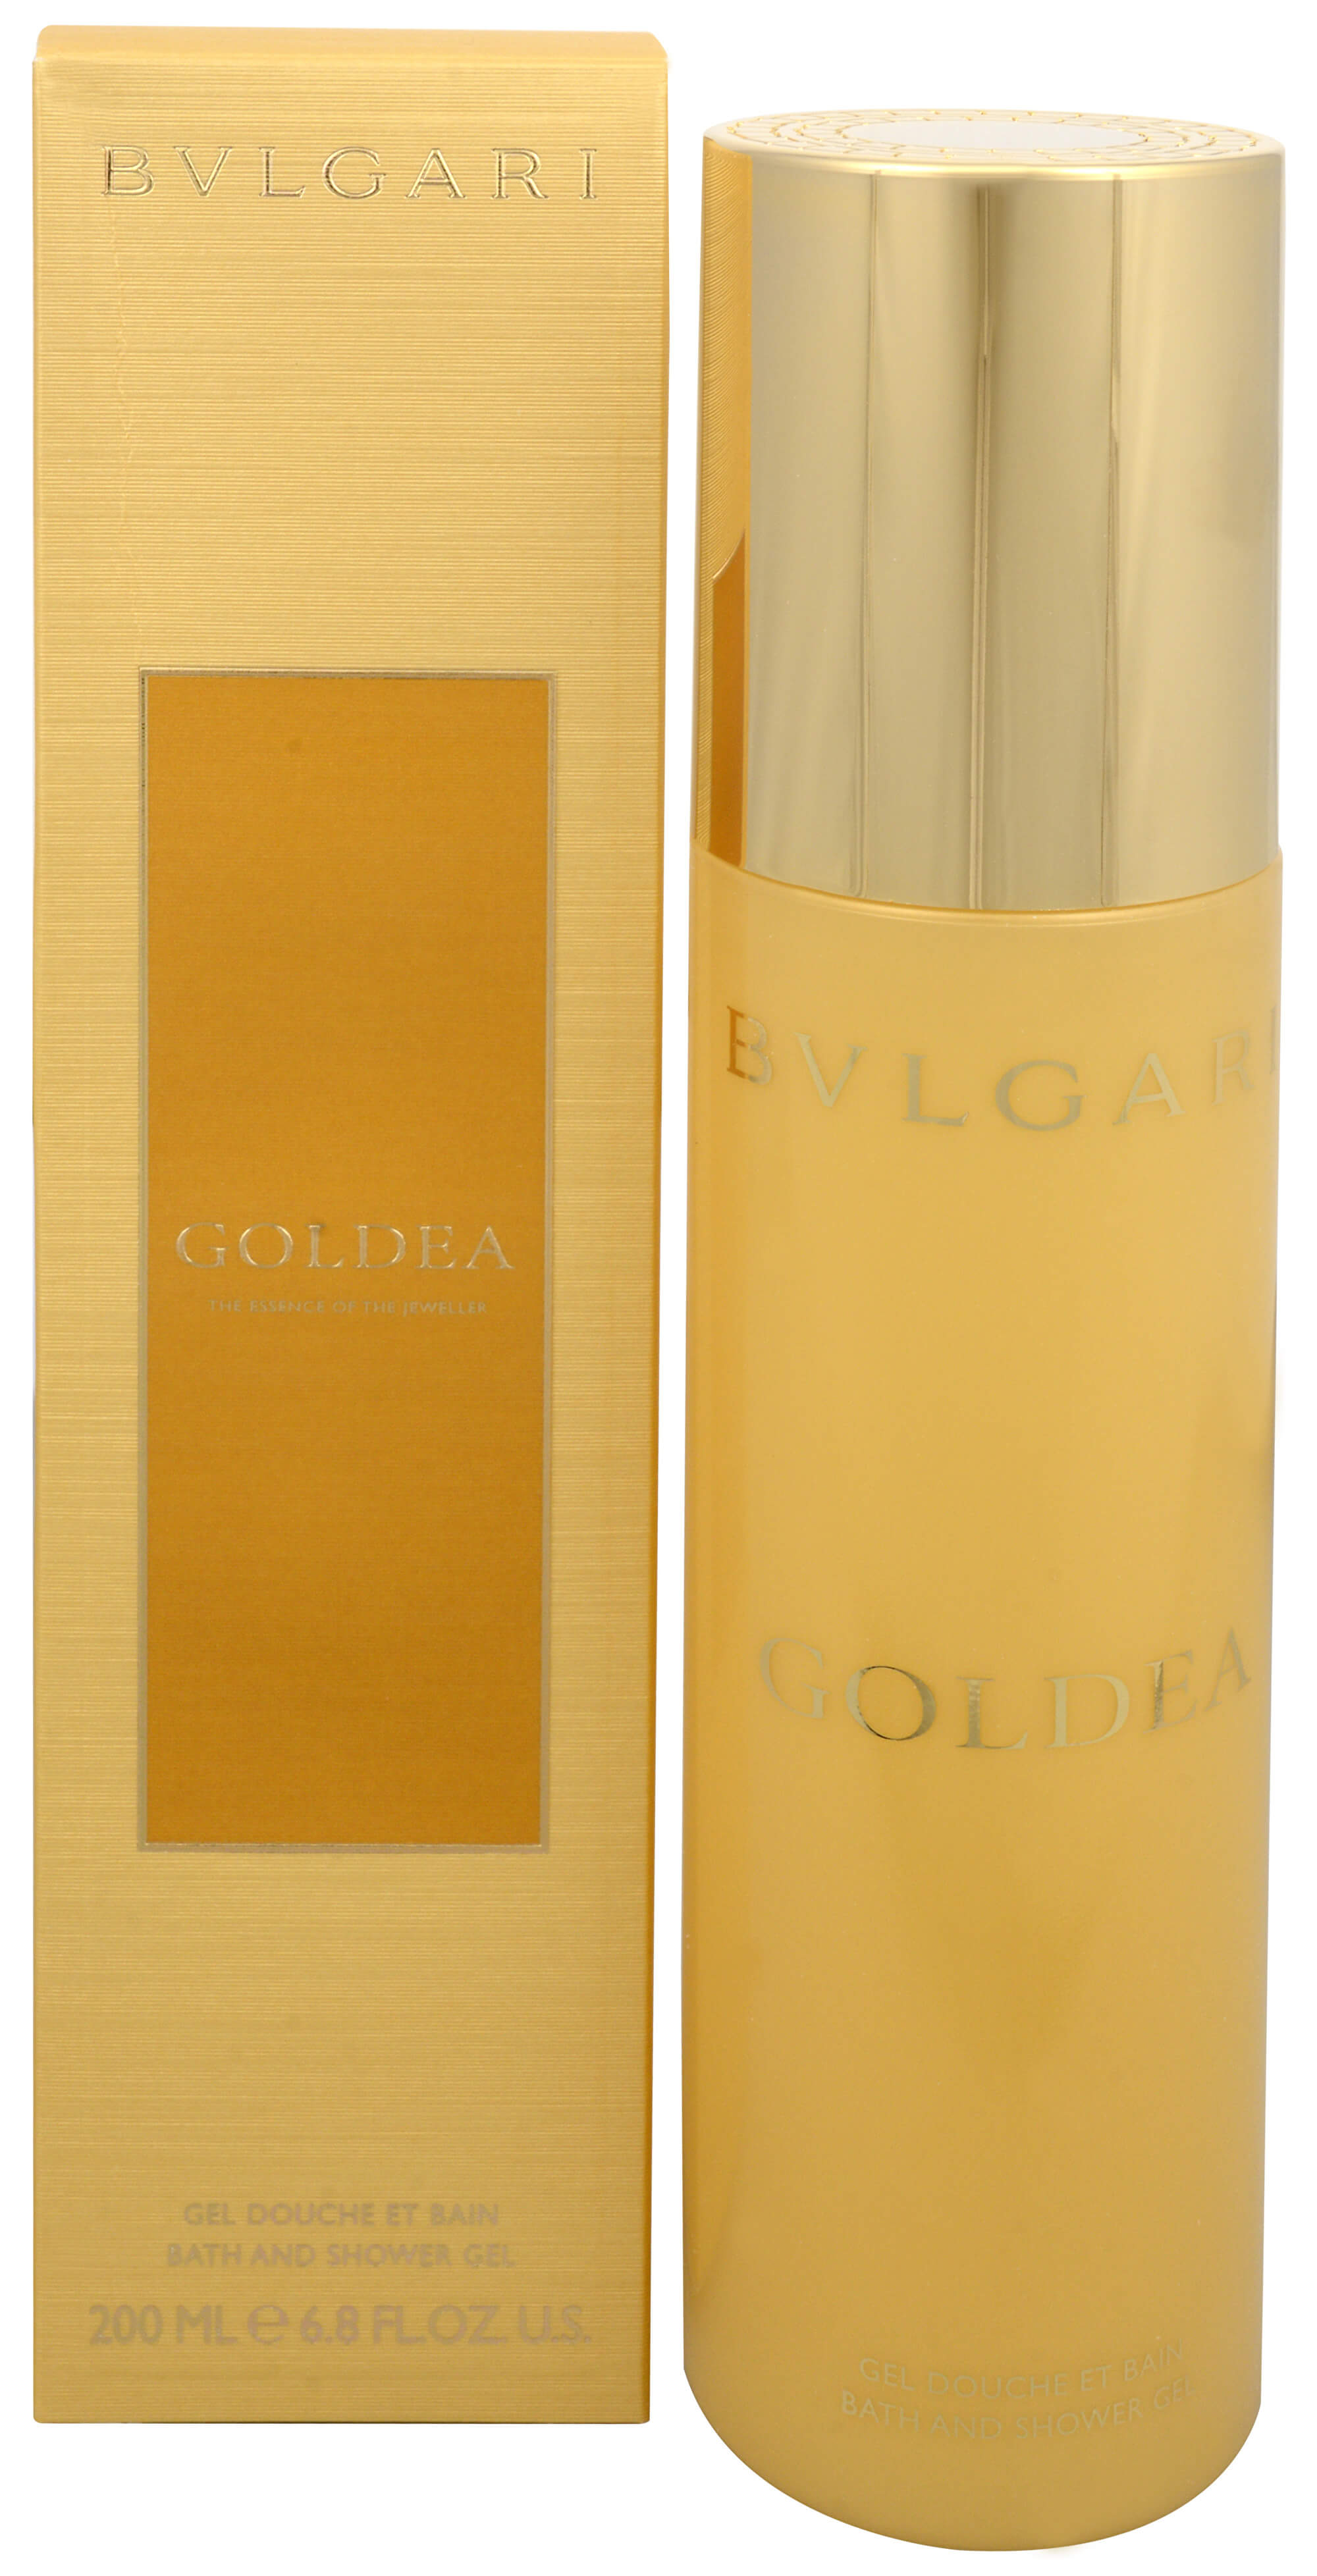 Bvlgari Goldea - sprchový gel 200 ml